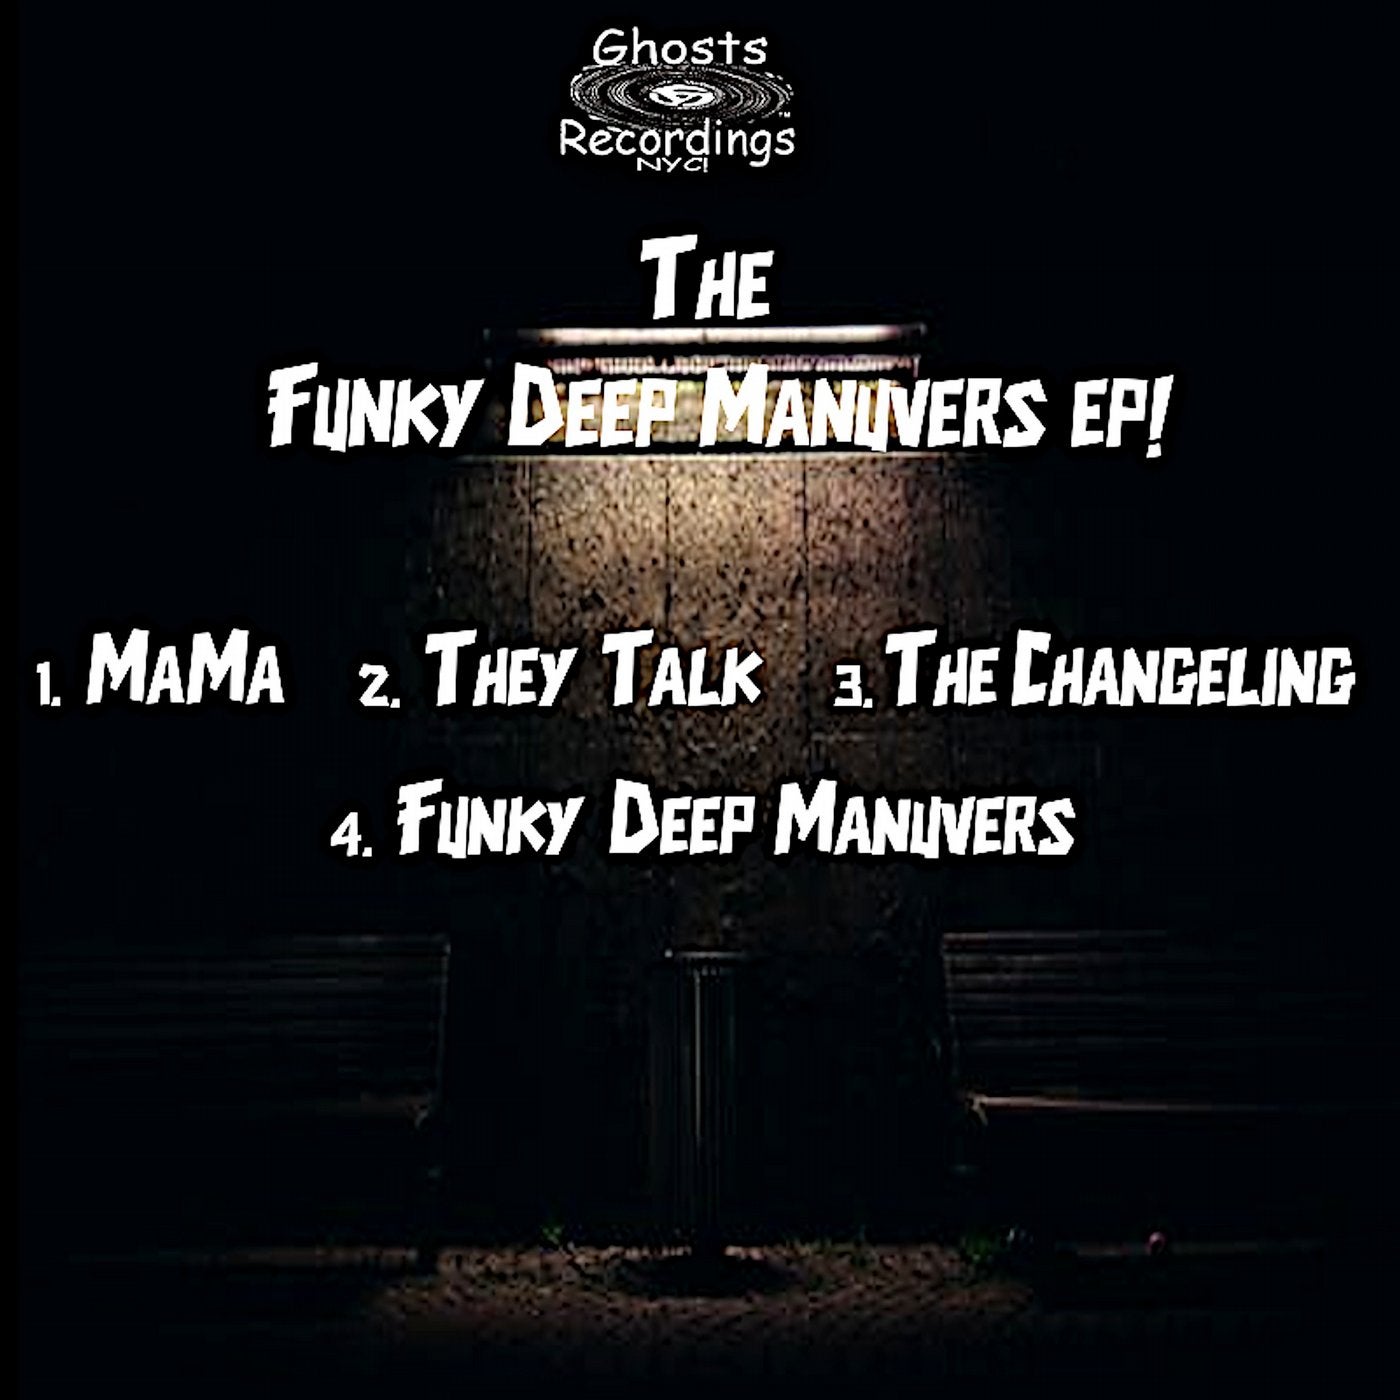 Funky Deep Manuvers Ep!